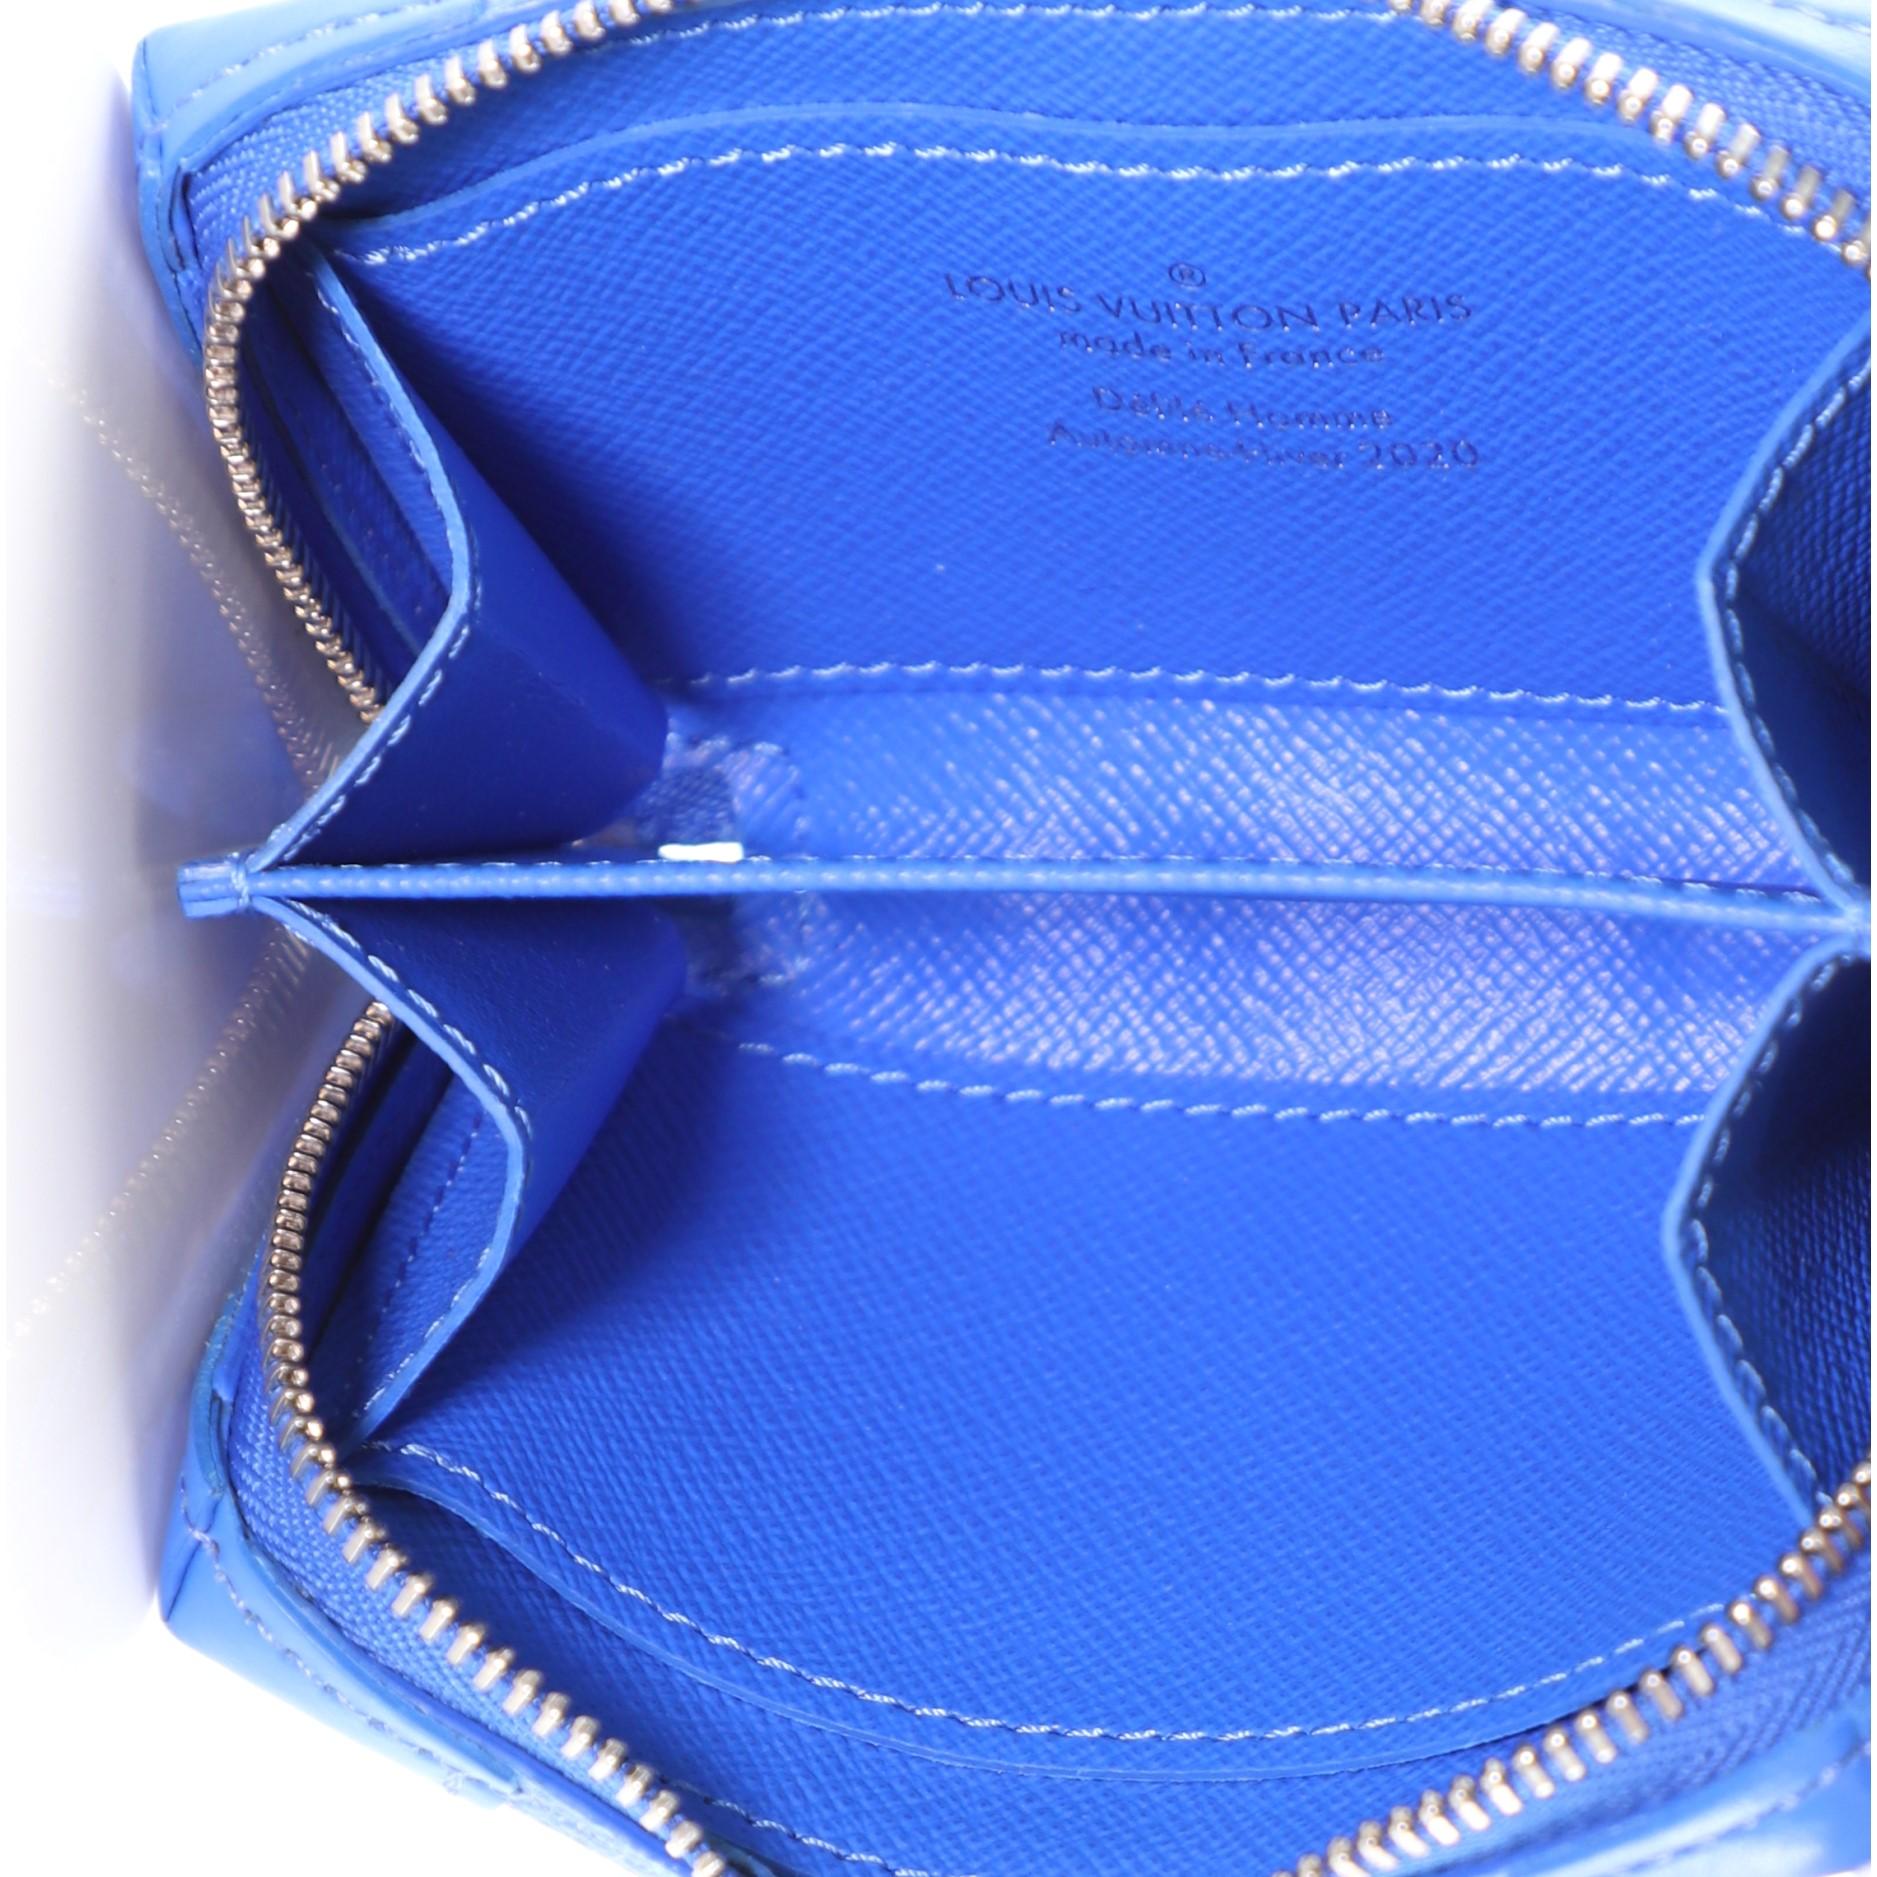 Blue Louis Vuitton Soft Trunk Necklace Wallet Limited Edition Monogram Clouds